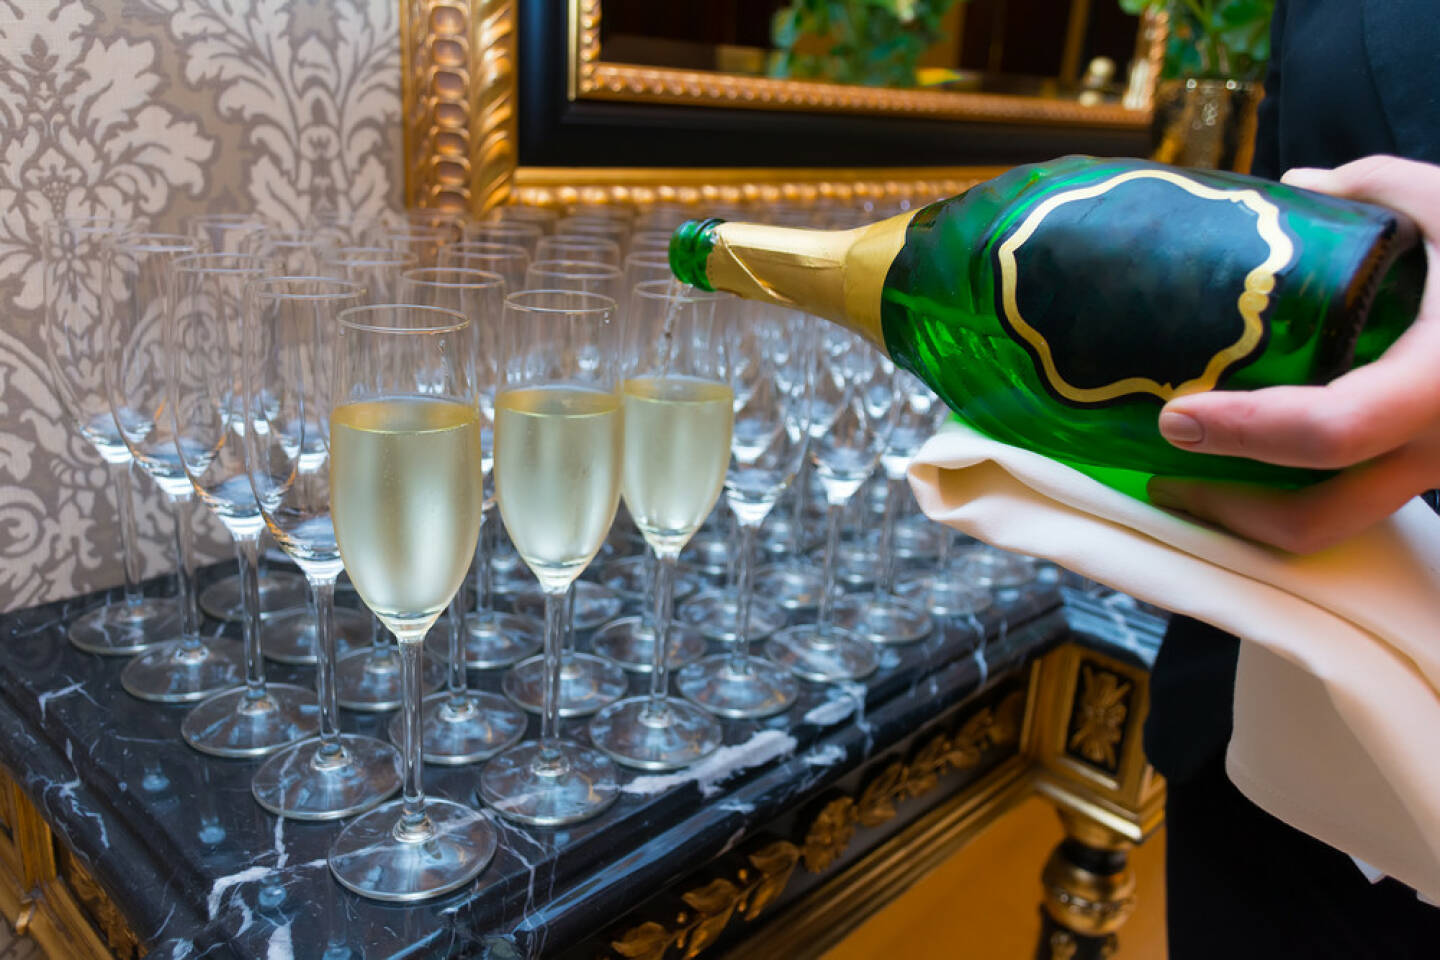 Gegenteil, voll, leer, einschenken, Sekt, Champagner, trinken, Gläser, http://www.shutterstock.com/de/pic-243772615/stock-photo-the-bartender-pours-champagne-into-the-empty-glasses-from-the-bottle.html